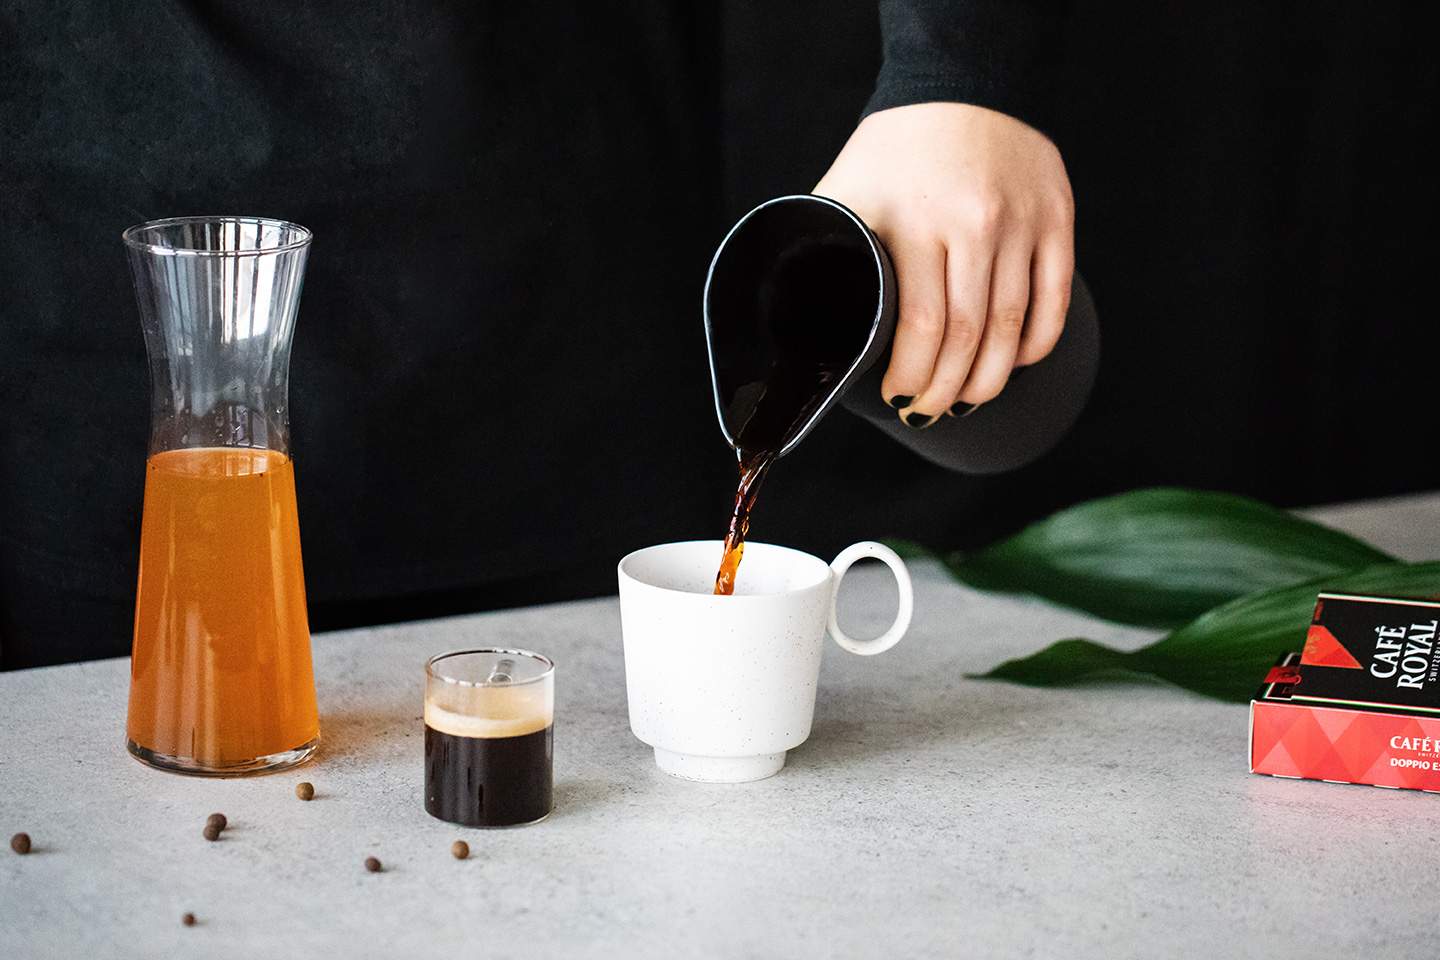 03-kaffee-espresso-ton-sirup-capsules